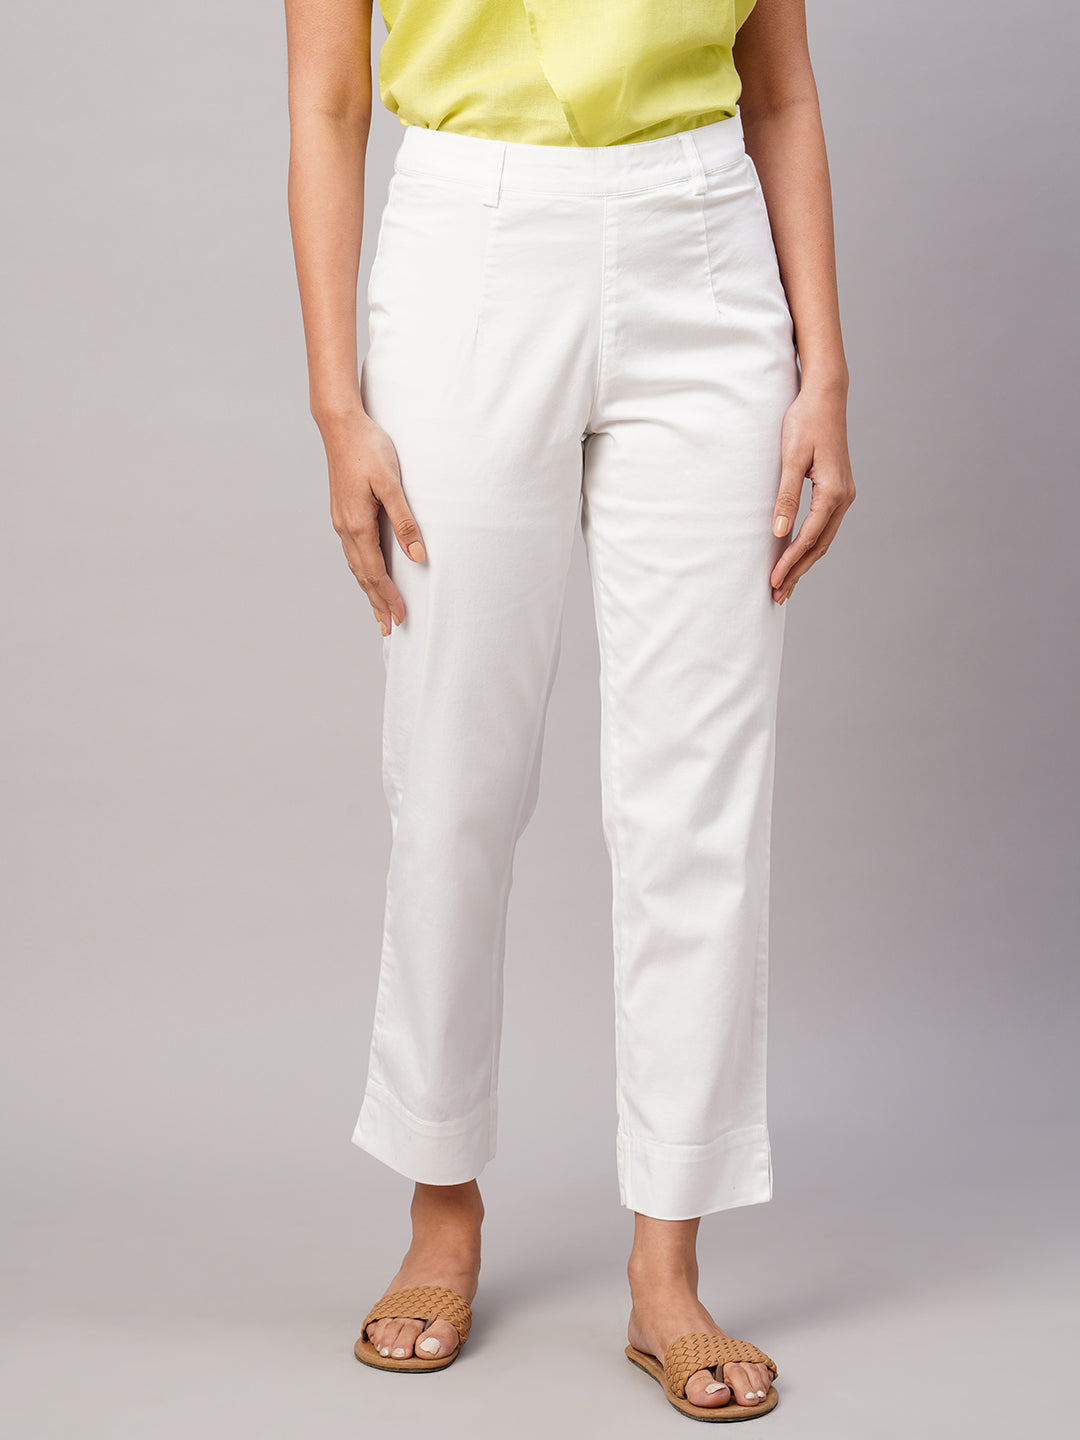 Women's White Cotton Lycra Regular Fit Pant